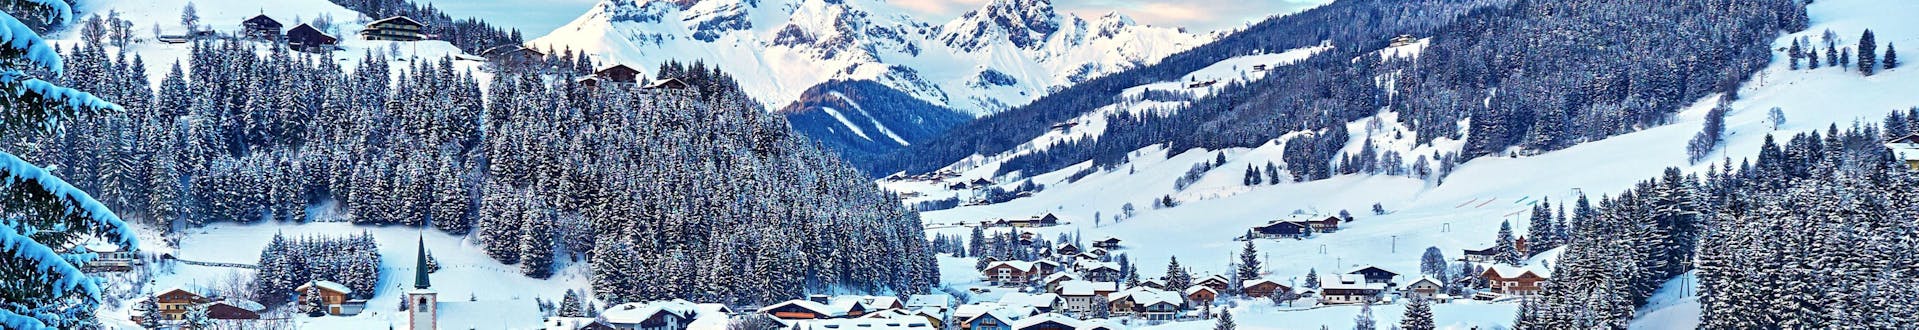 Town of Filzmoos, Austria, near the slopes where you can book ski lessons.